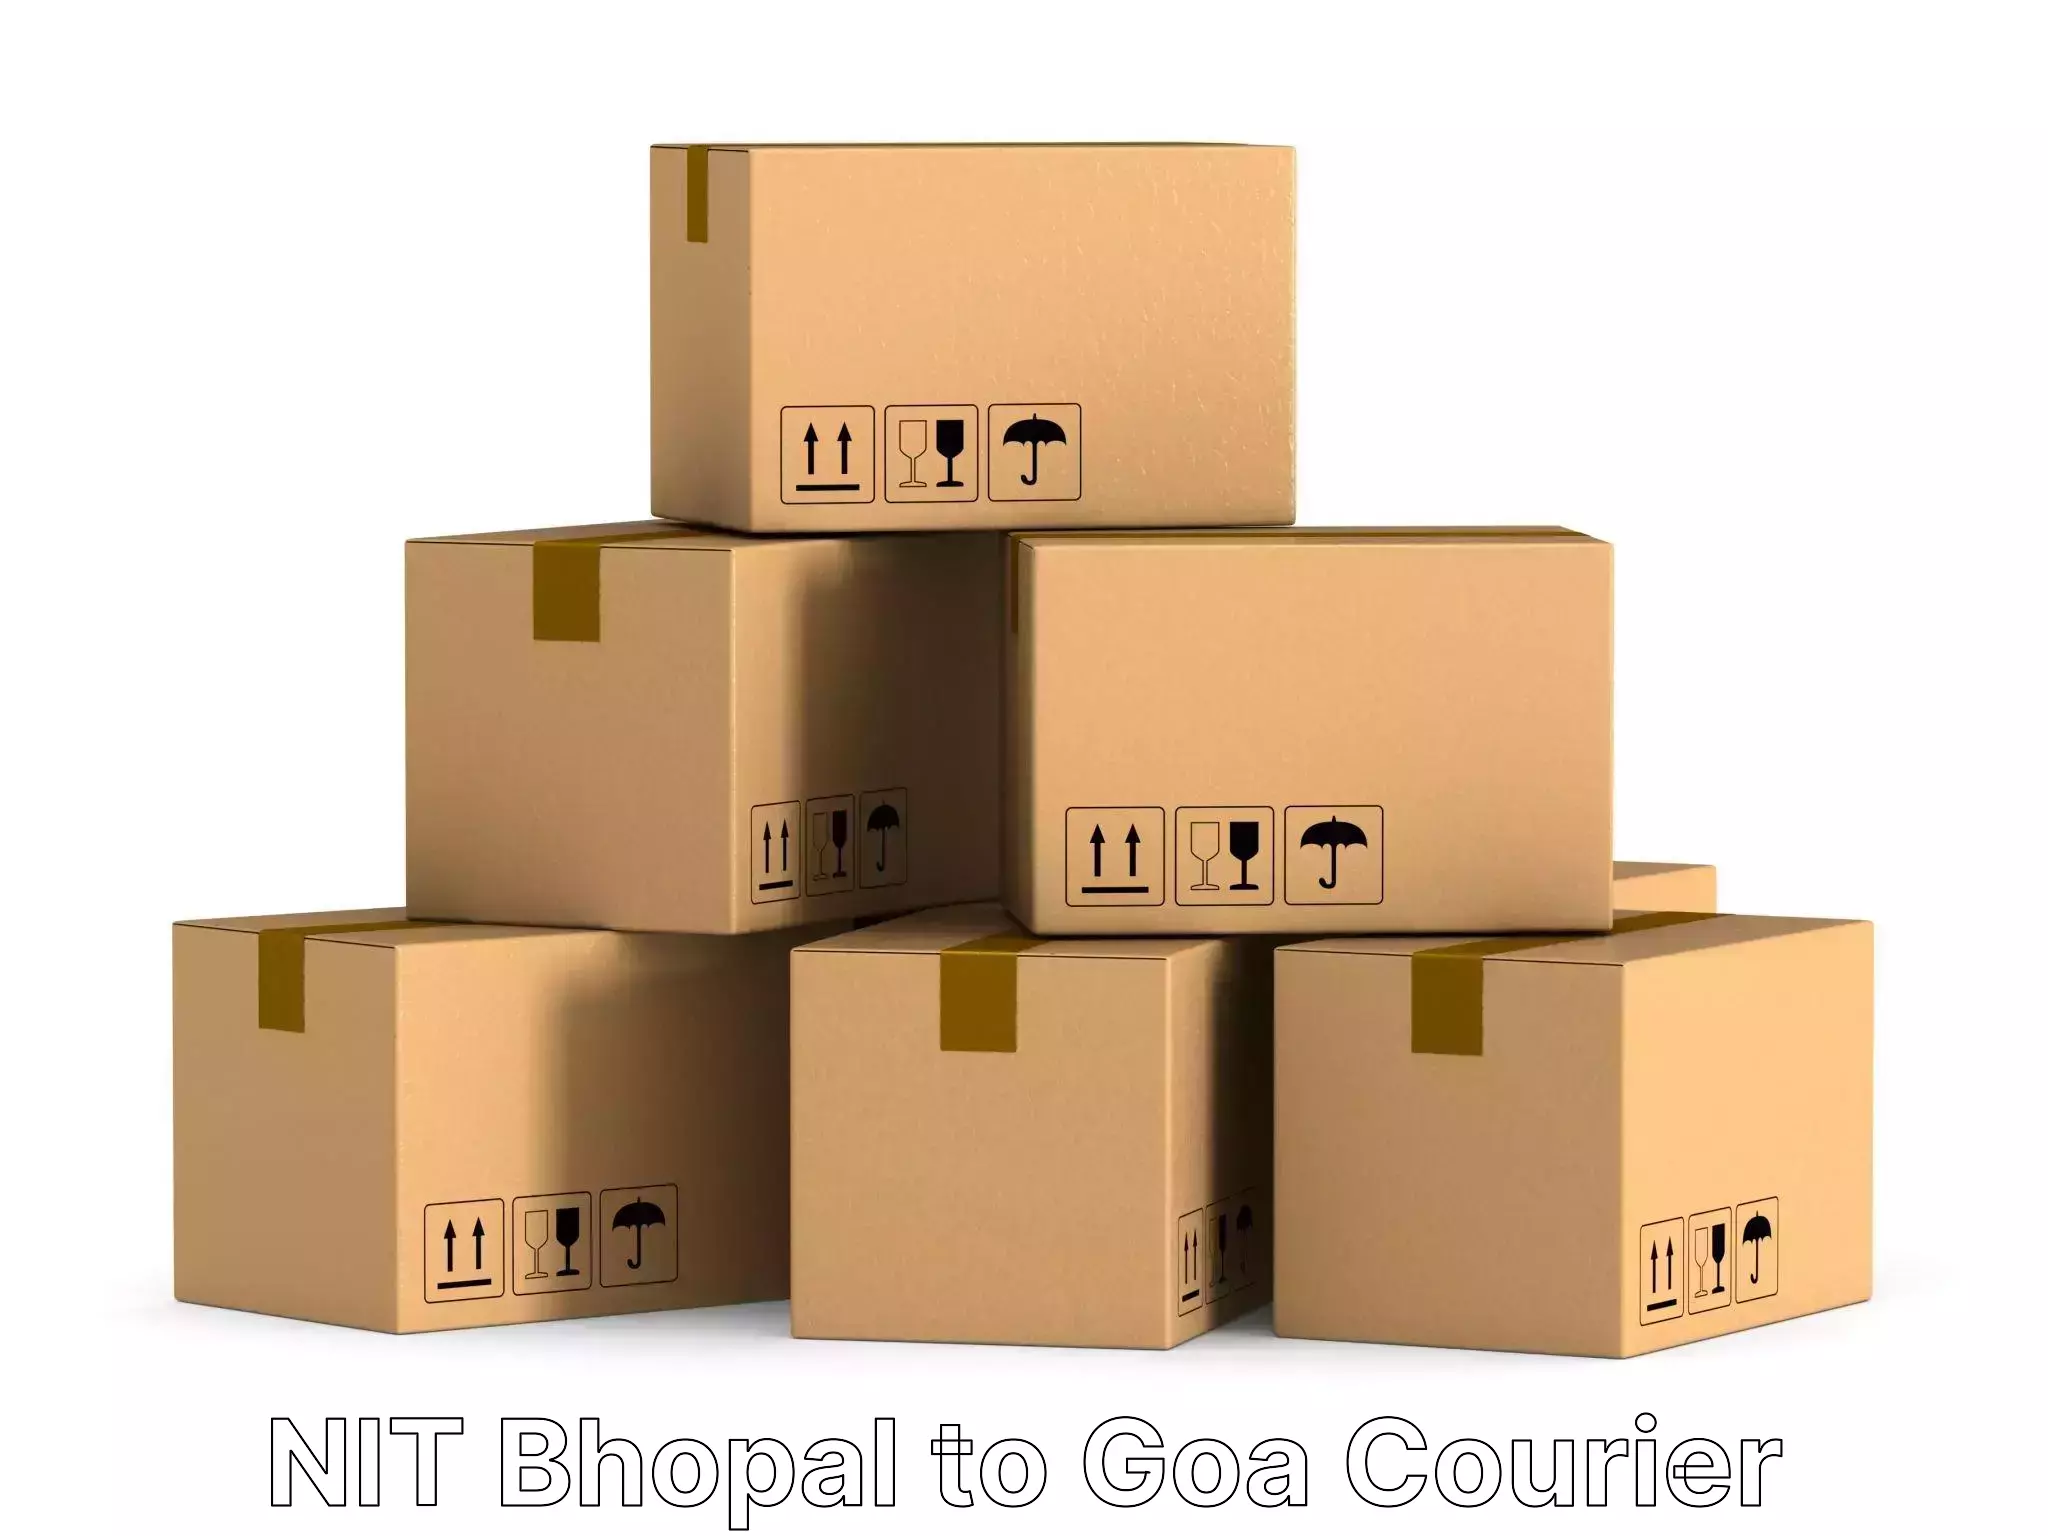 Professional moving company NIT Bhopal to Goa